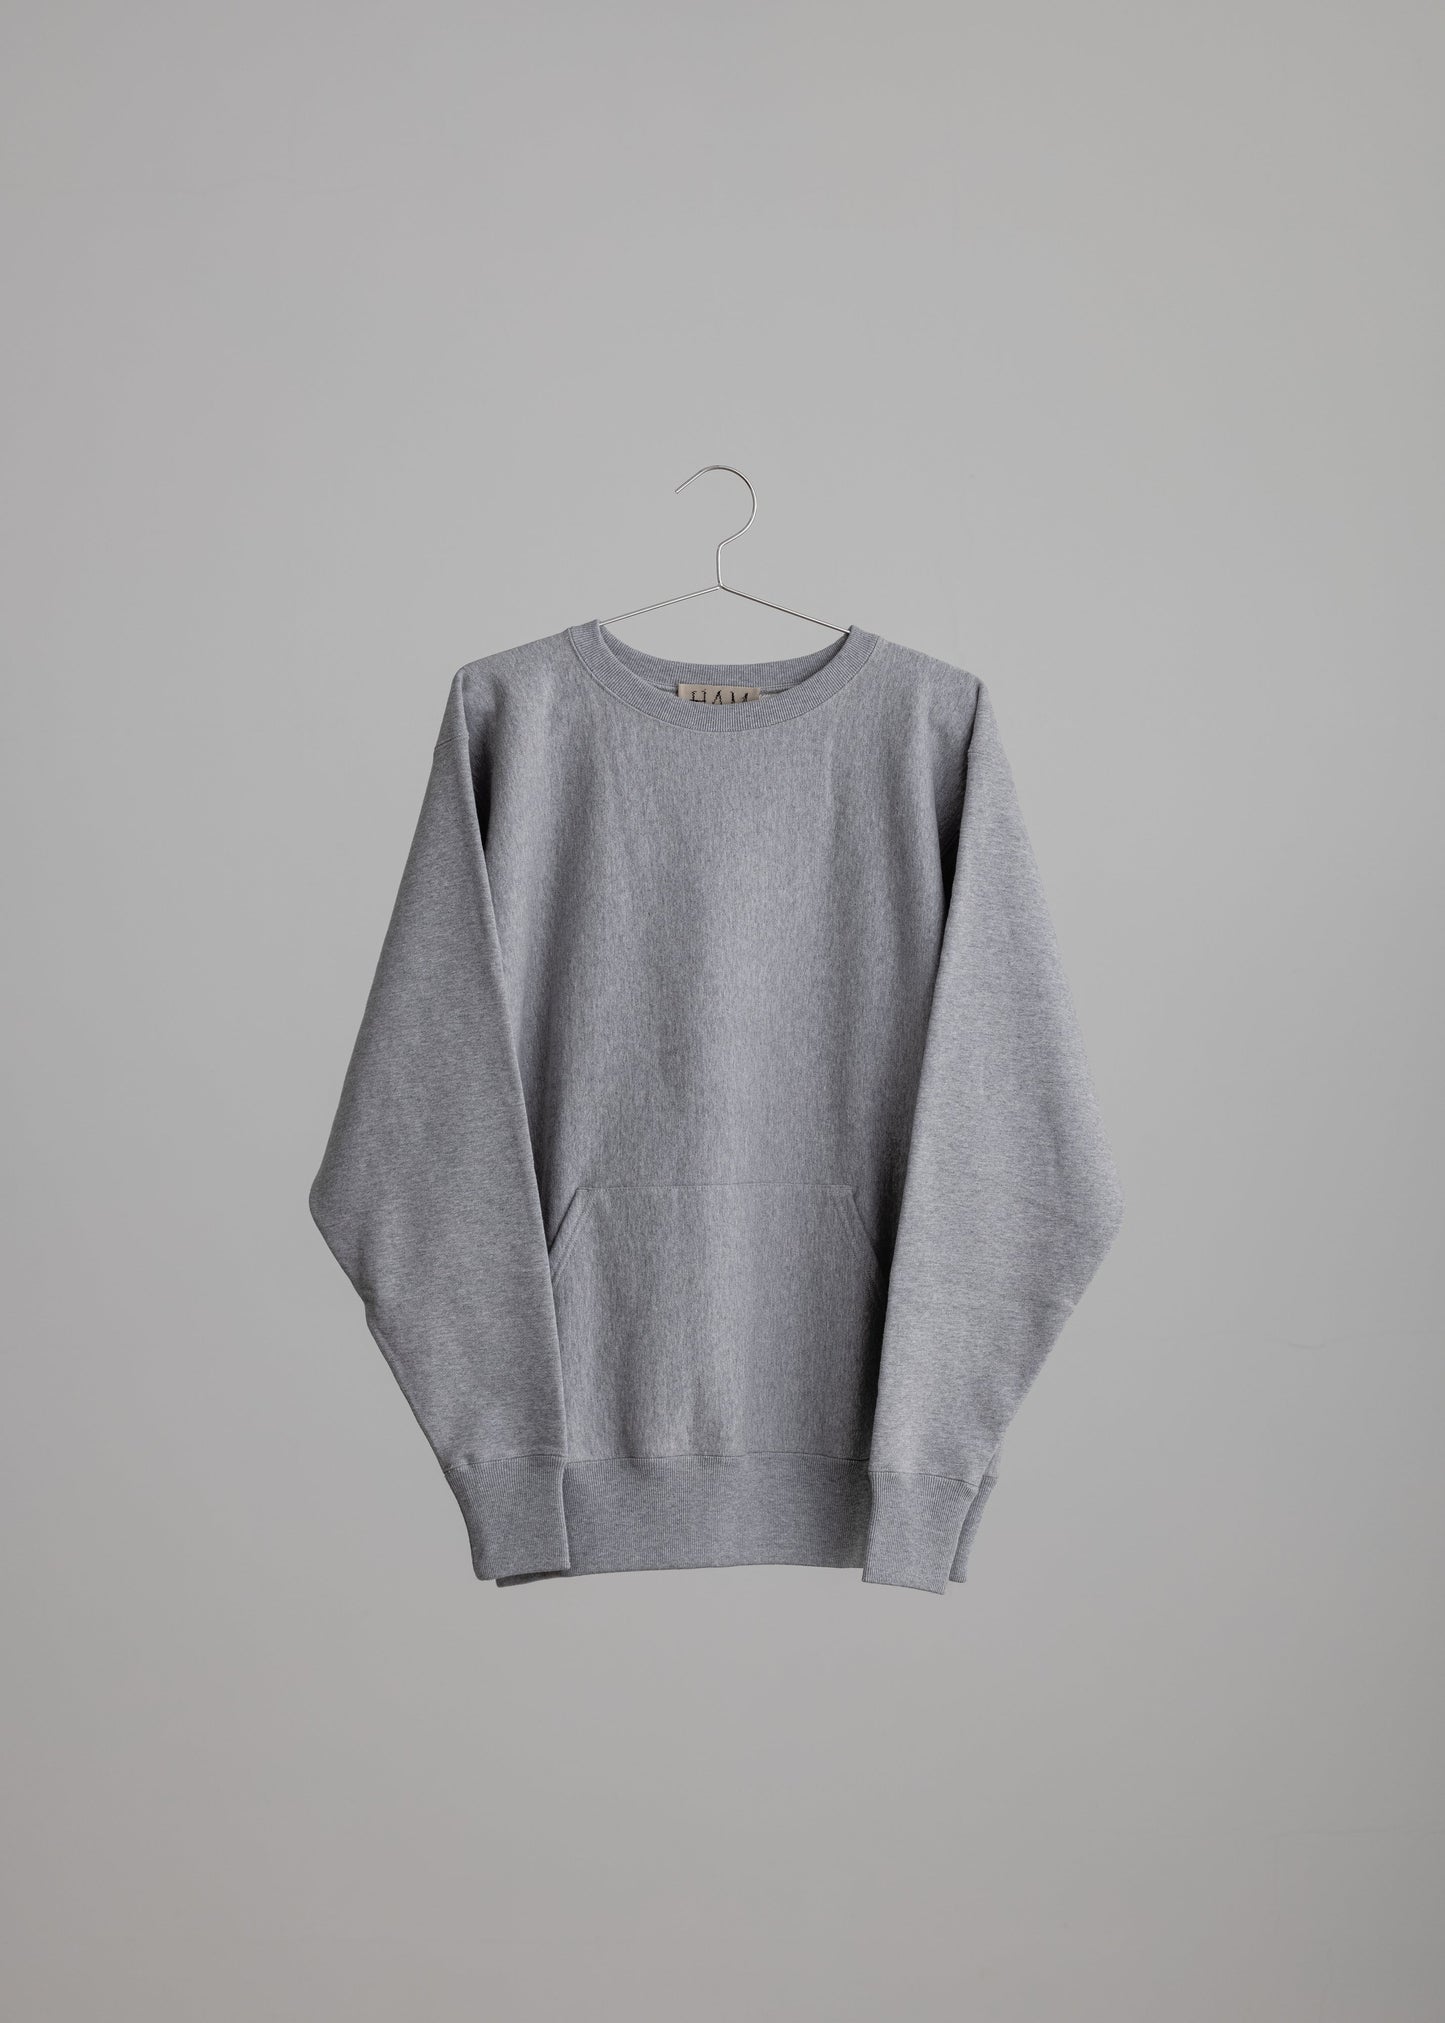 [ HAM IAM ] Fieldnotes " OORURI mini embroidery オオルリ刺繍小 " classic athletic sweat shirt c/# yarn dyed grey